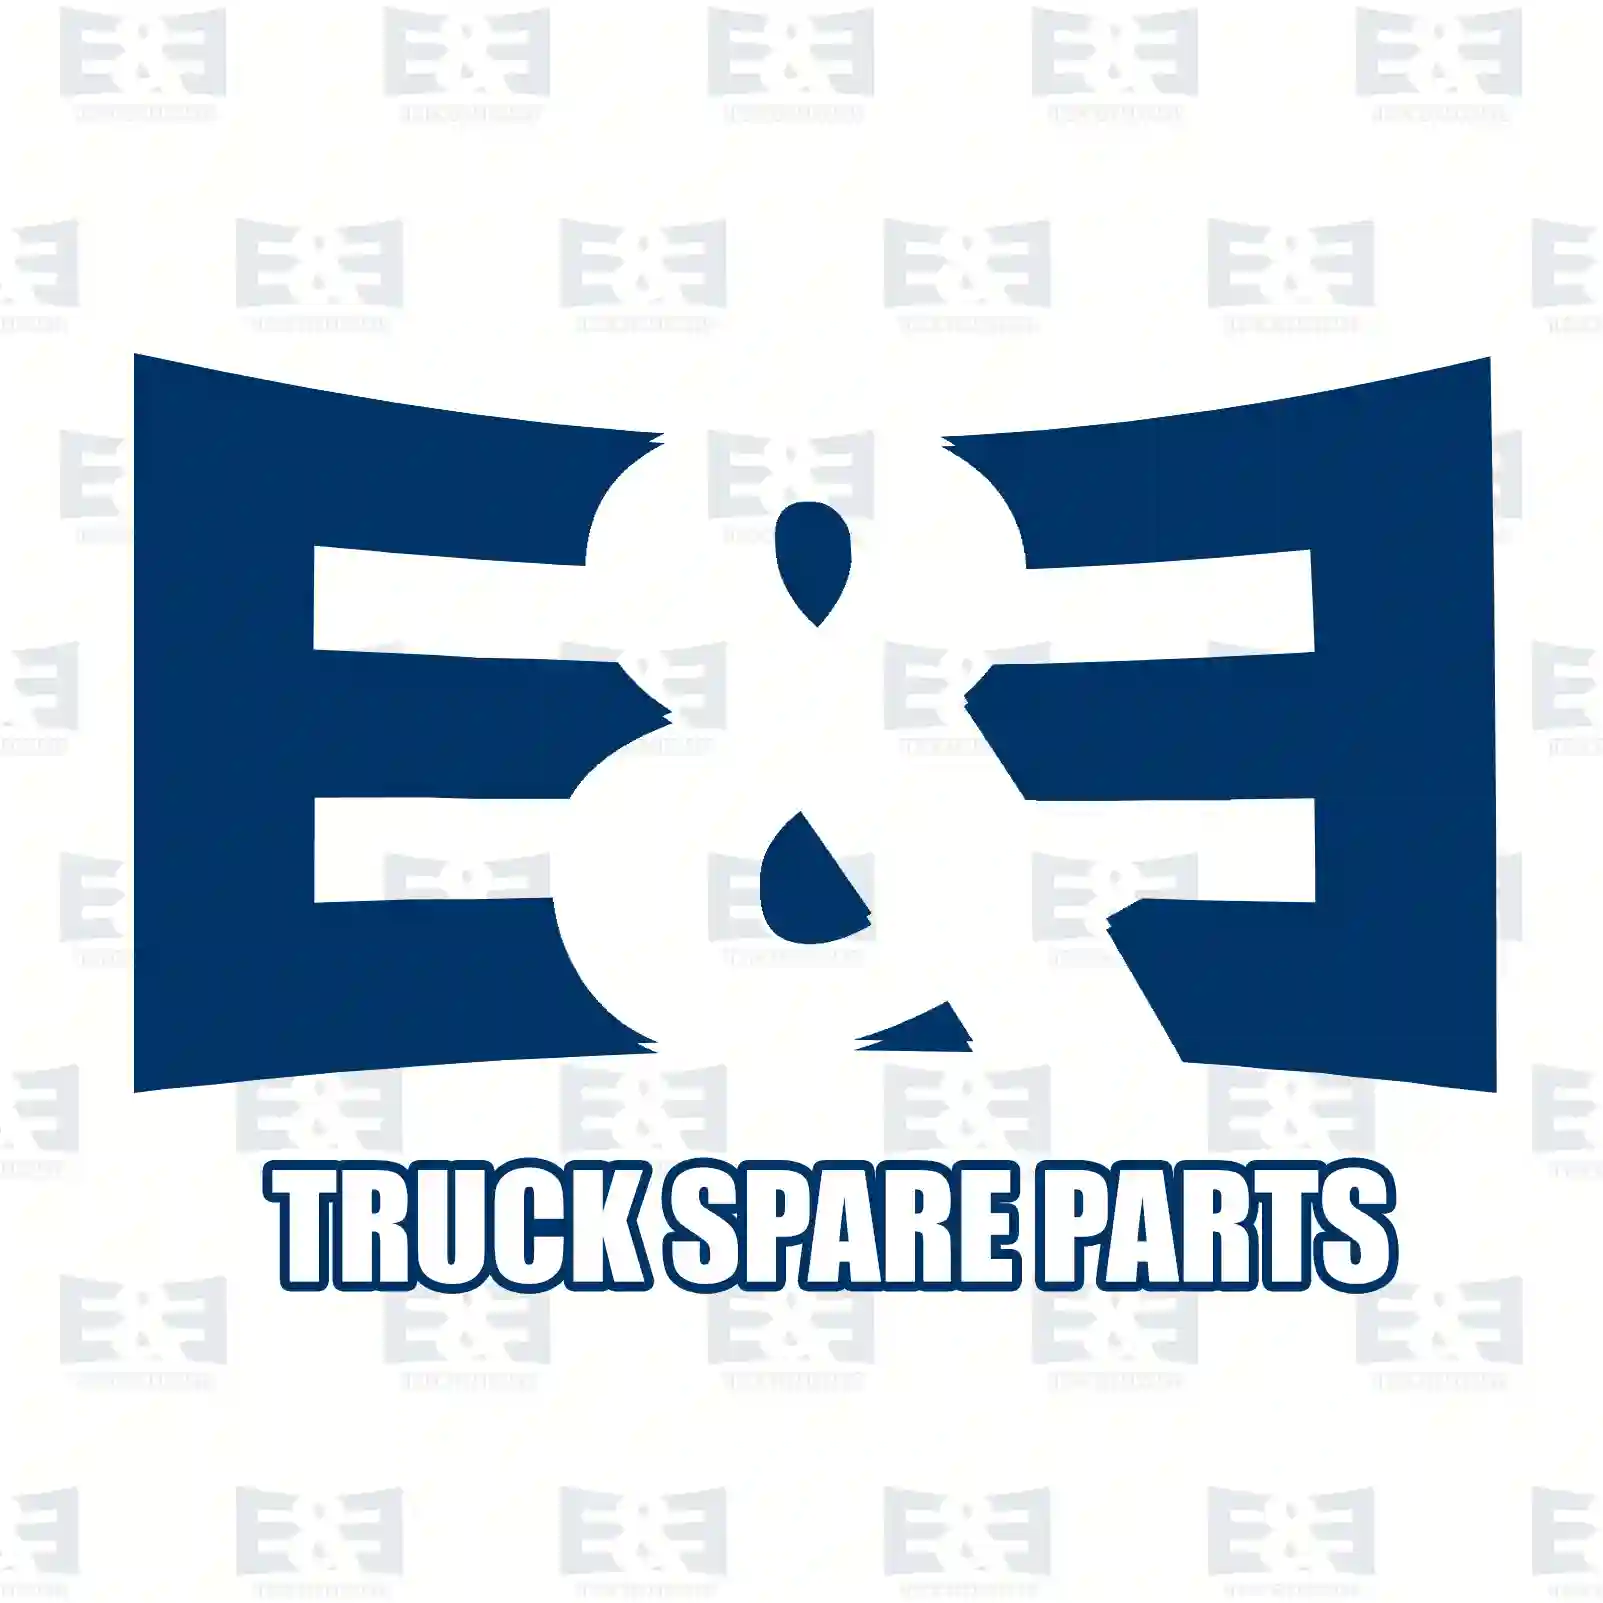 Air Tank Air tank, EE No 2E2296978 ,  oem no:81514010133, 81514010212, 83514010512, , E&E Truck Spare Parts | Truck Spare Parts, Auotomotive Spare Parts